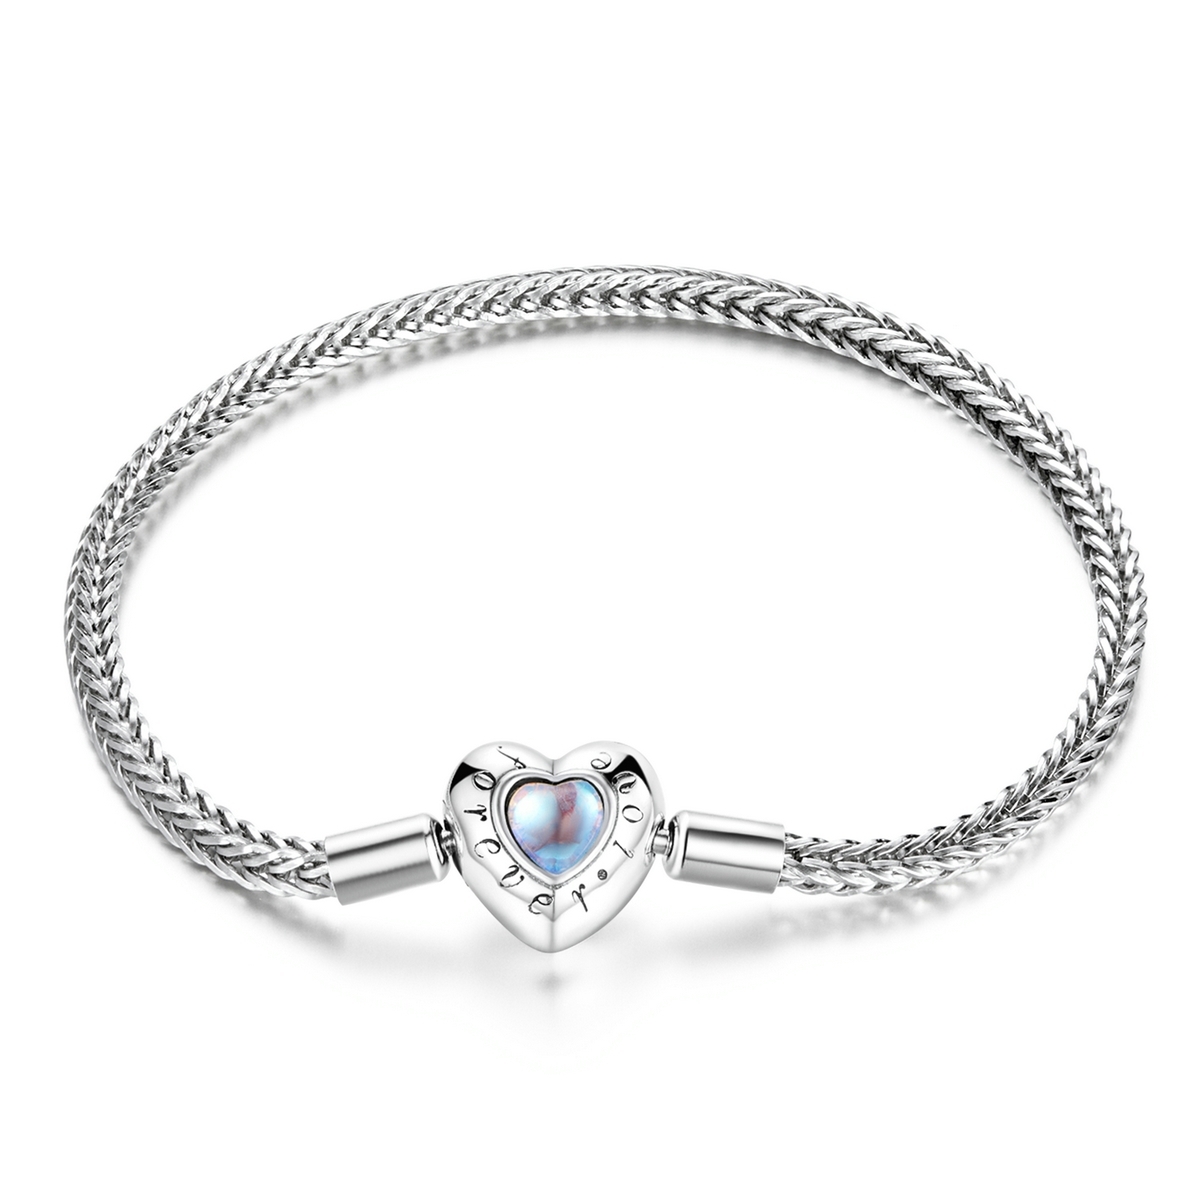 Primary image for S925 Sterling Silver Heart Moonstone Bracelet, Size:17cm